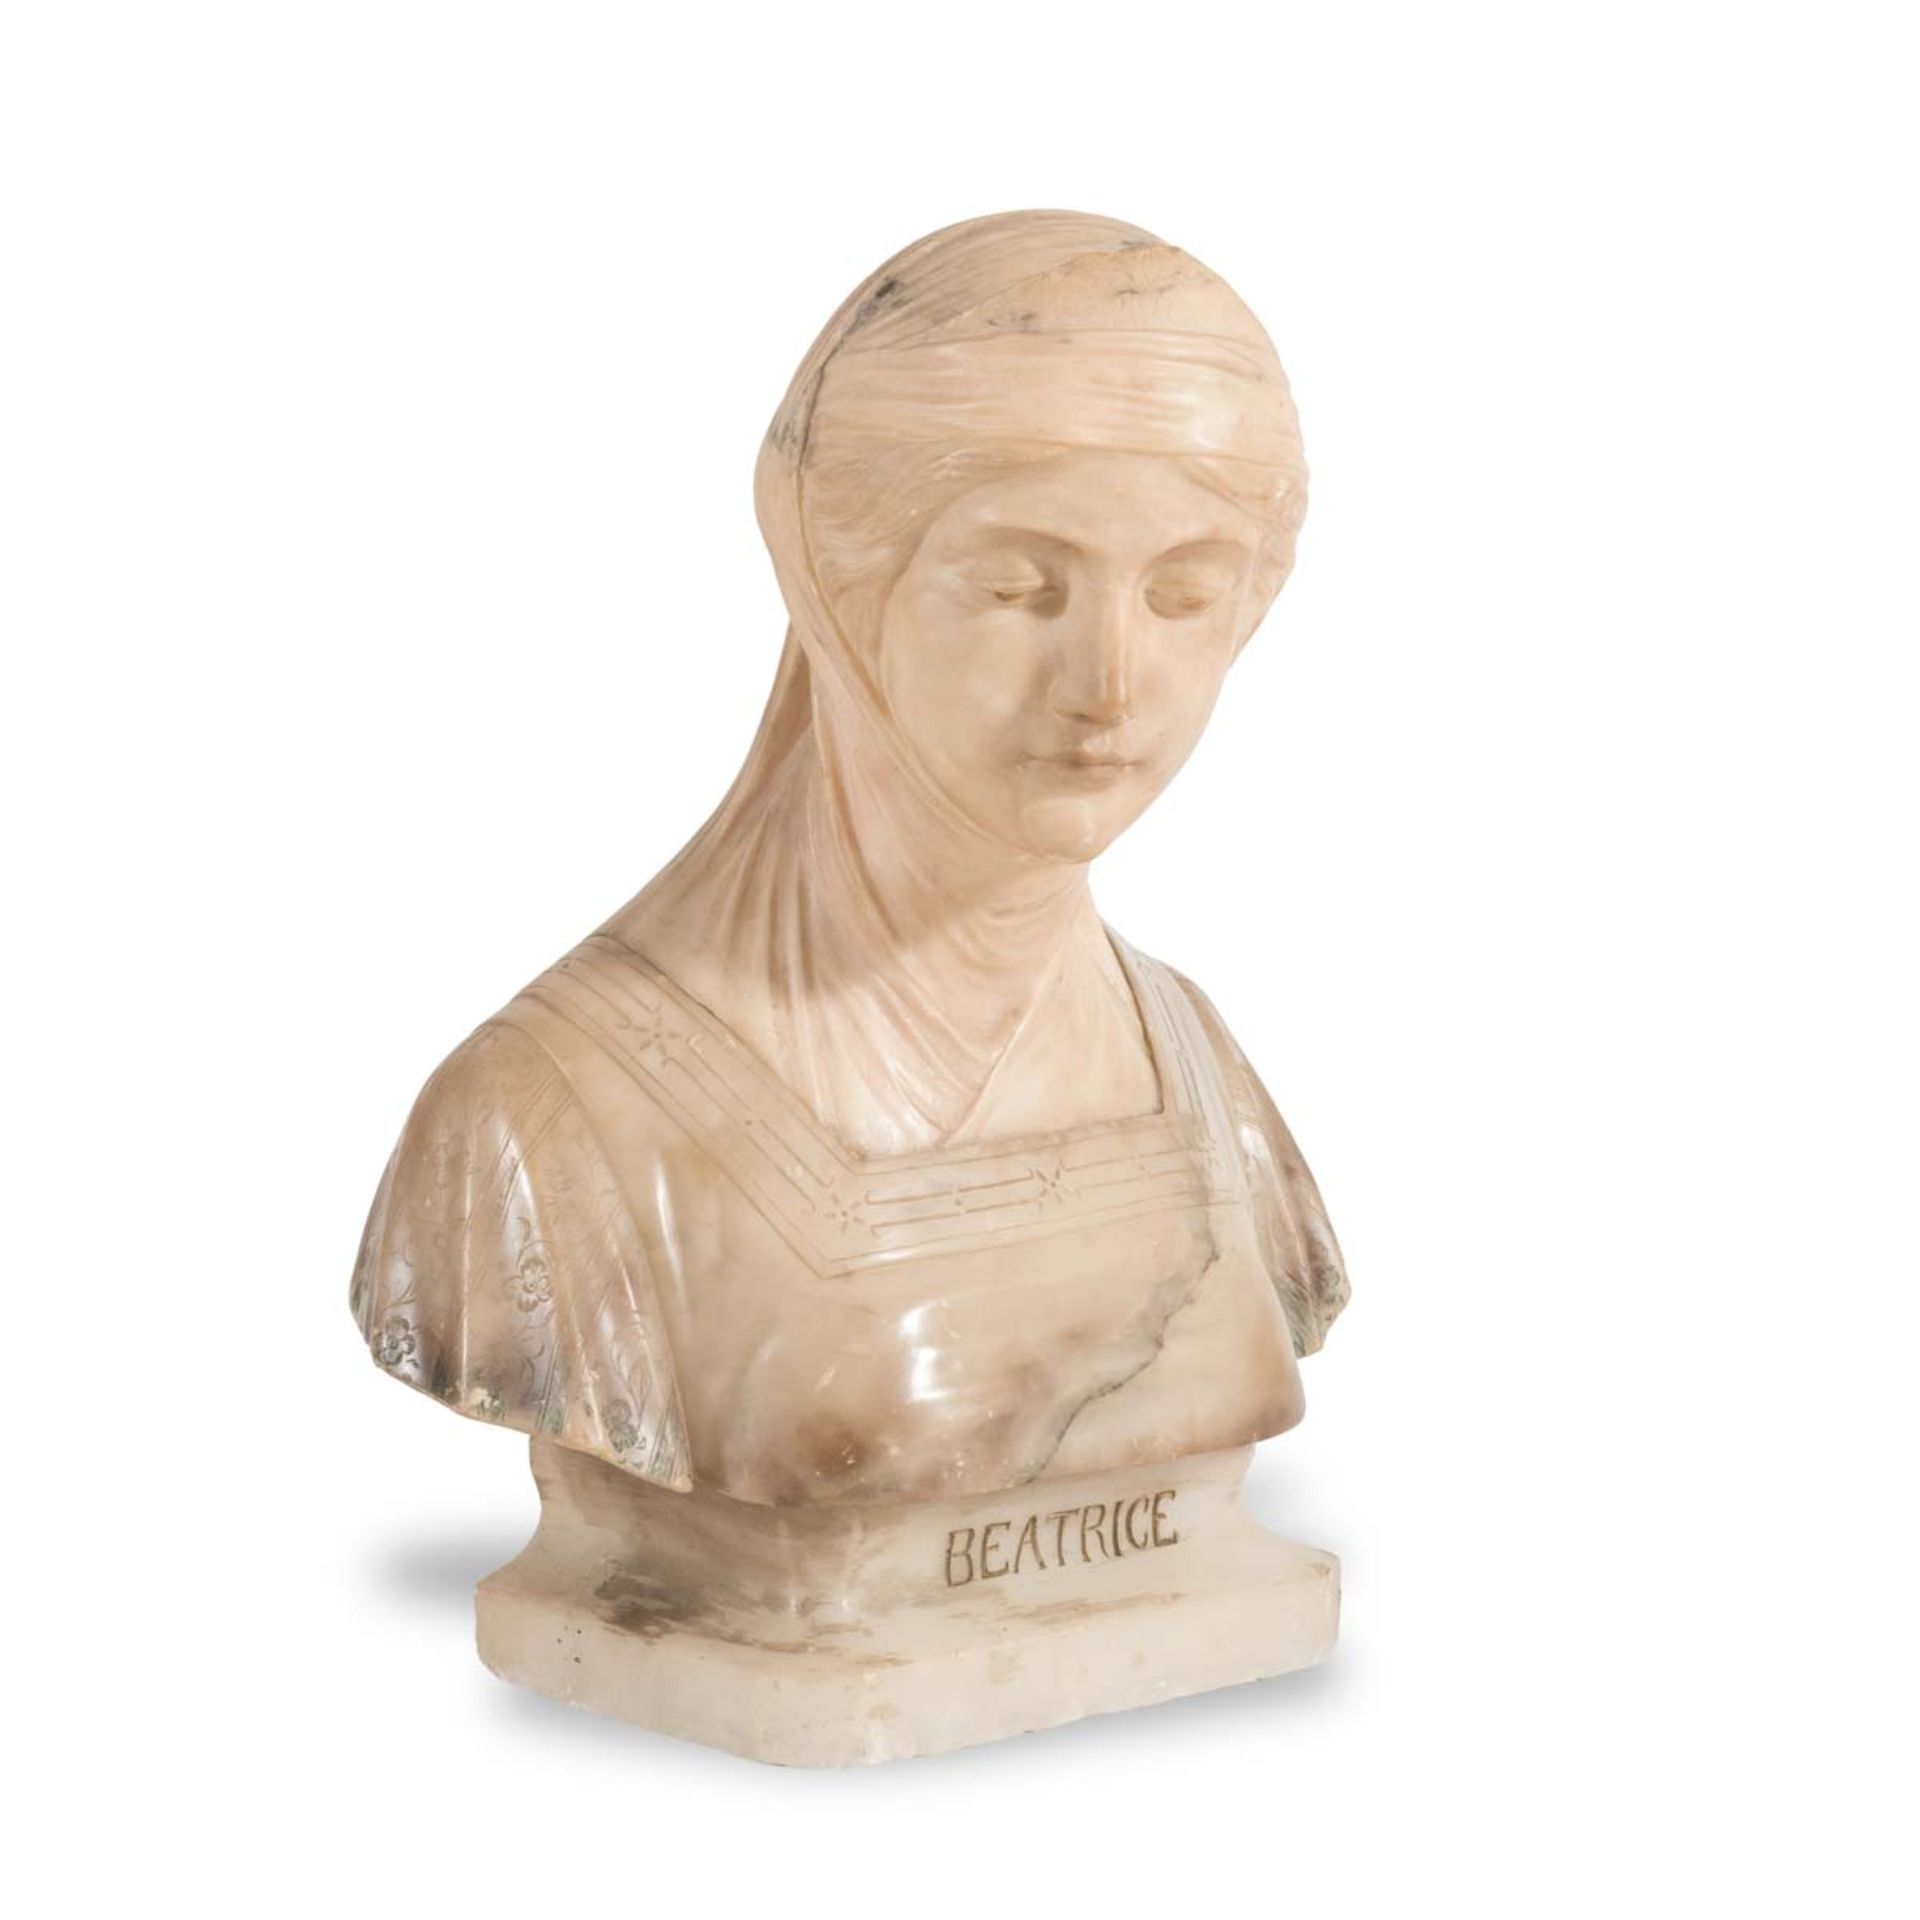 Busto in alabastro raffigurante “Beatrice”, Volterra, inizio del XX sec. - Image 2 of 2